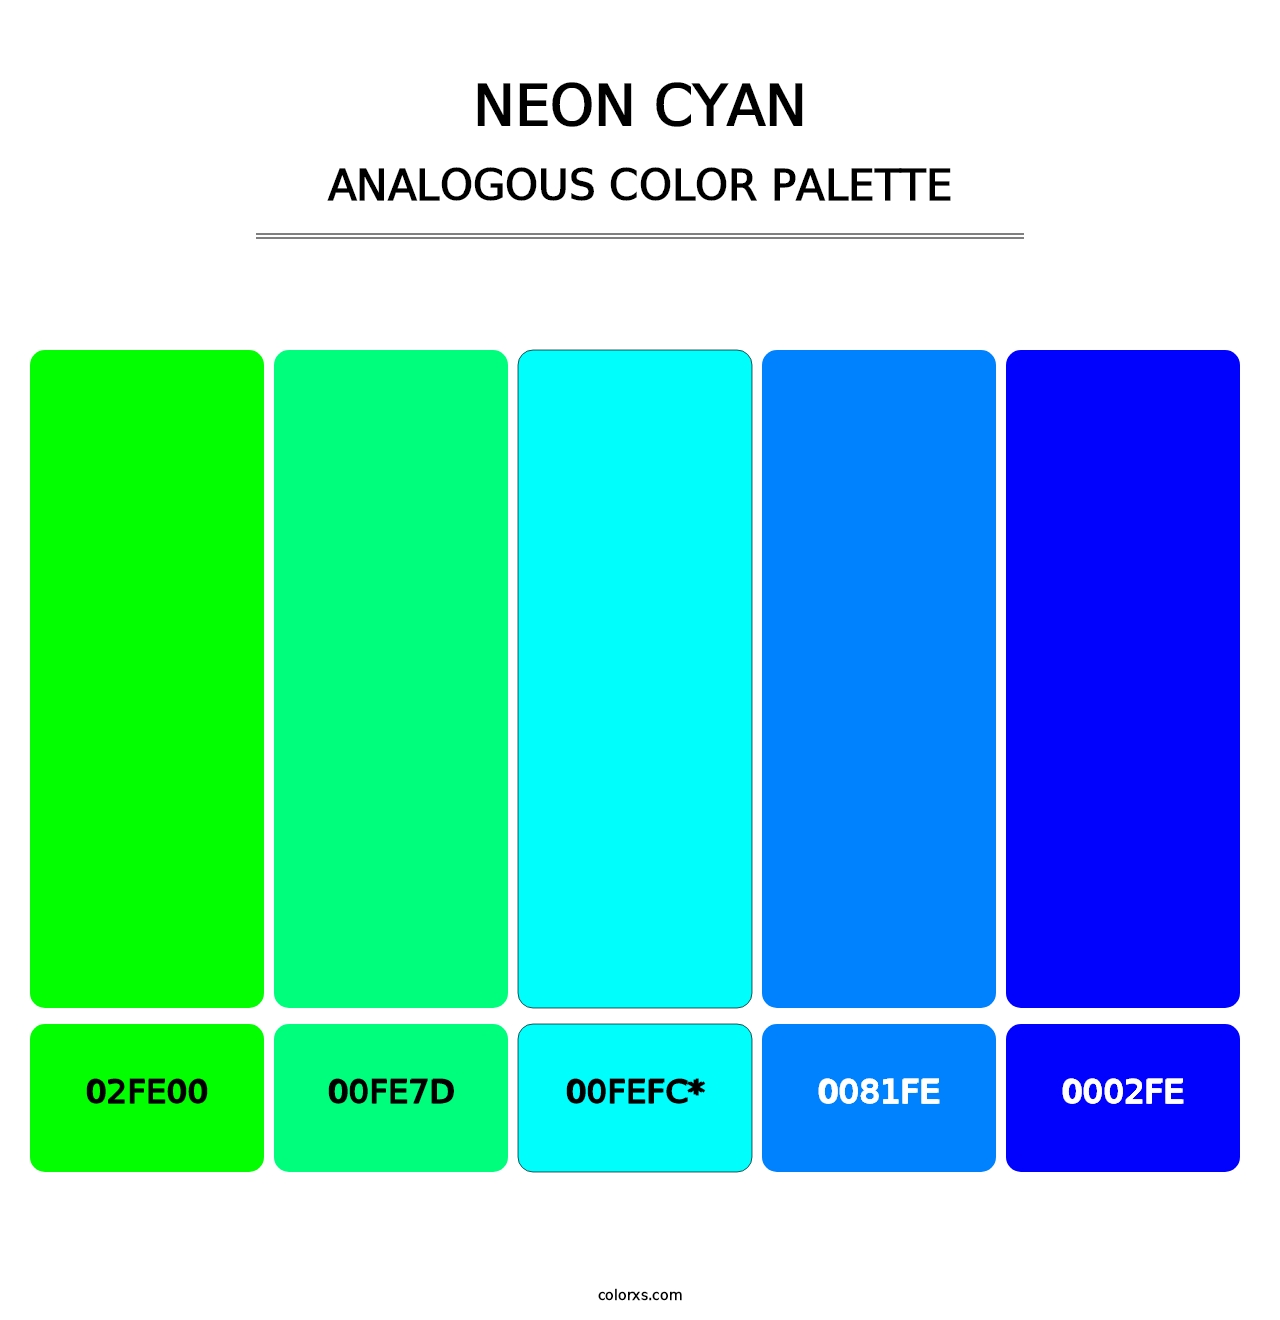 Neon Cyan - Analogous Color Palette